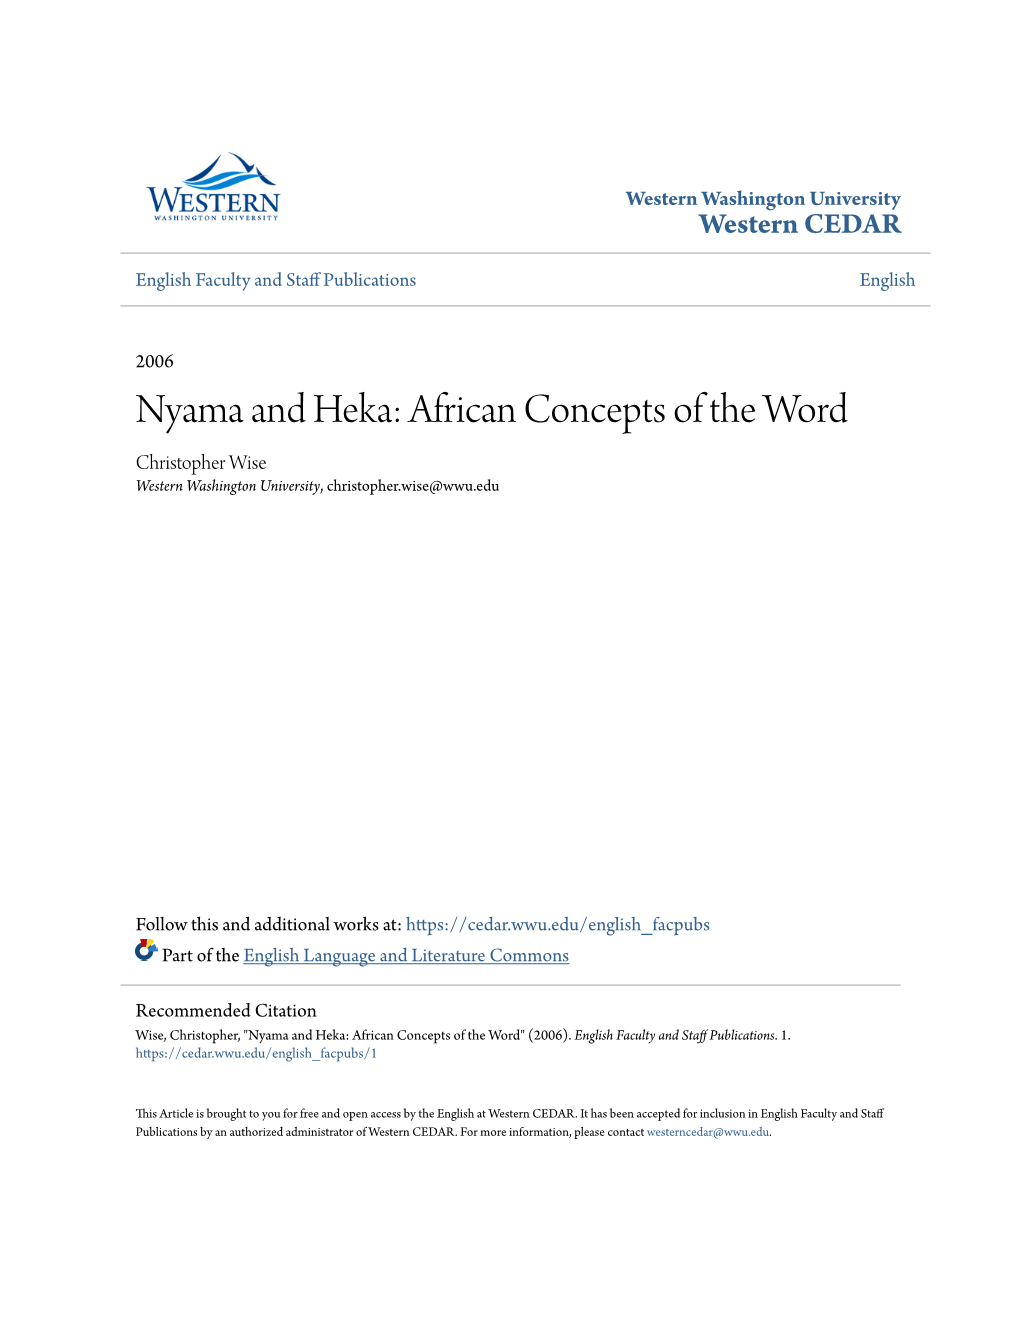 Nyama and Heka: African Concepts of the Word Christopher Wise Western Washington University, Christopher.Wise@Wwu.Edu